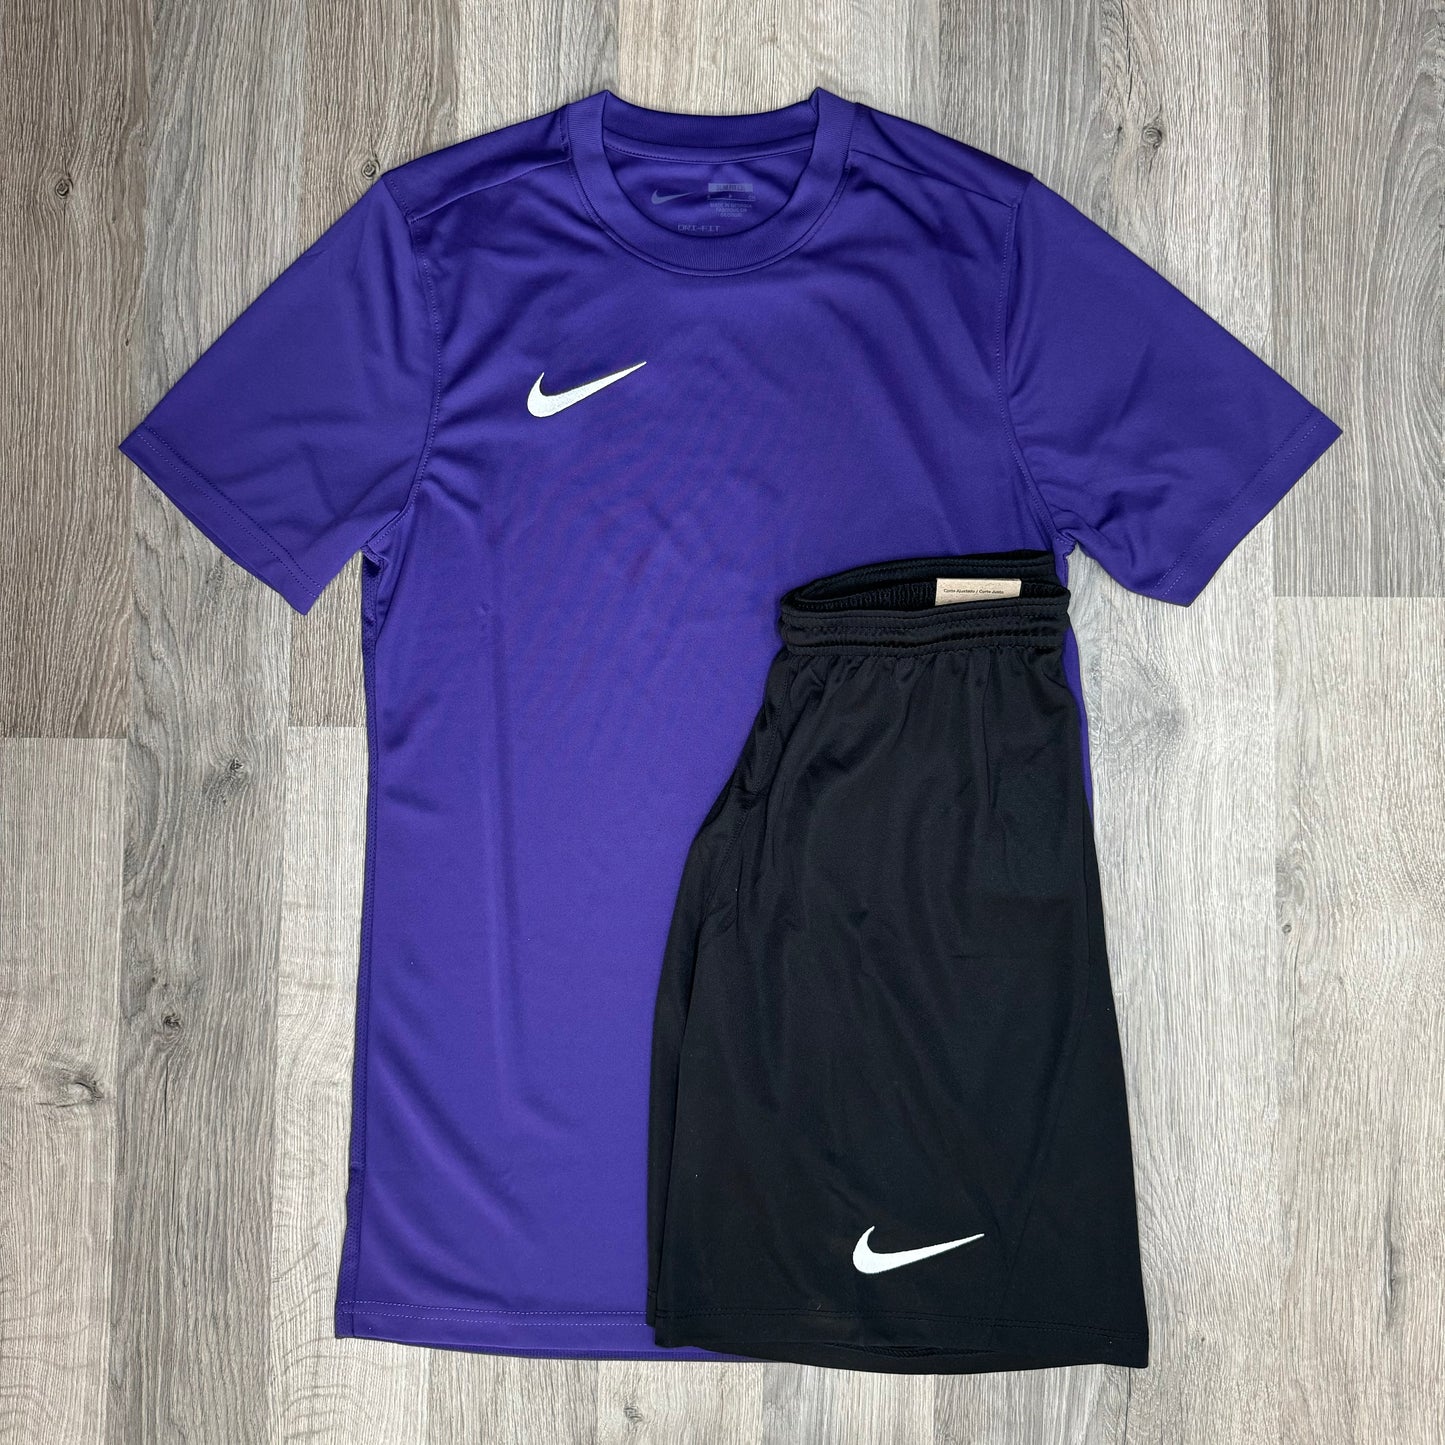 Nike Dri Fit Set - Tee & Shorts - Purple / Black (Junior)